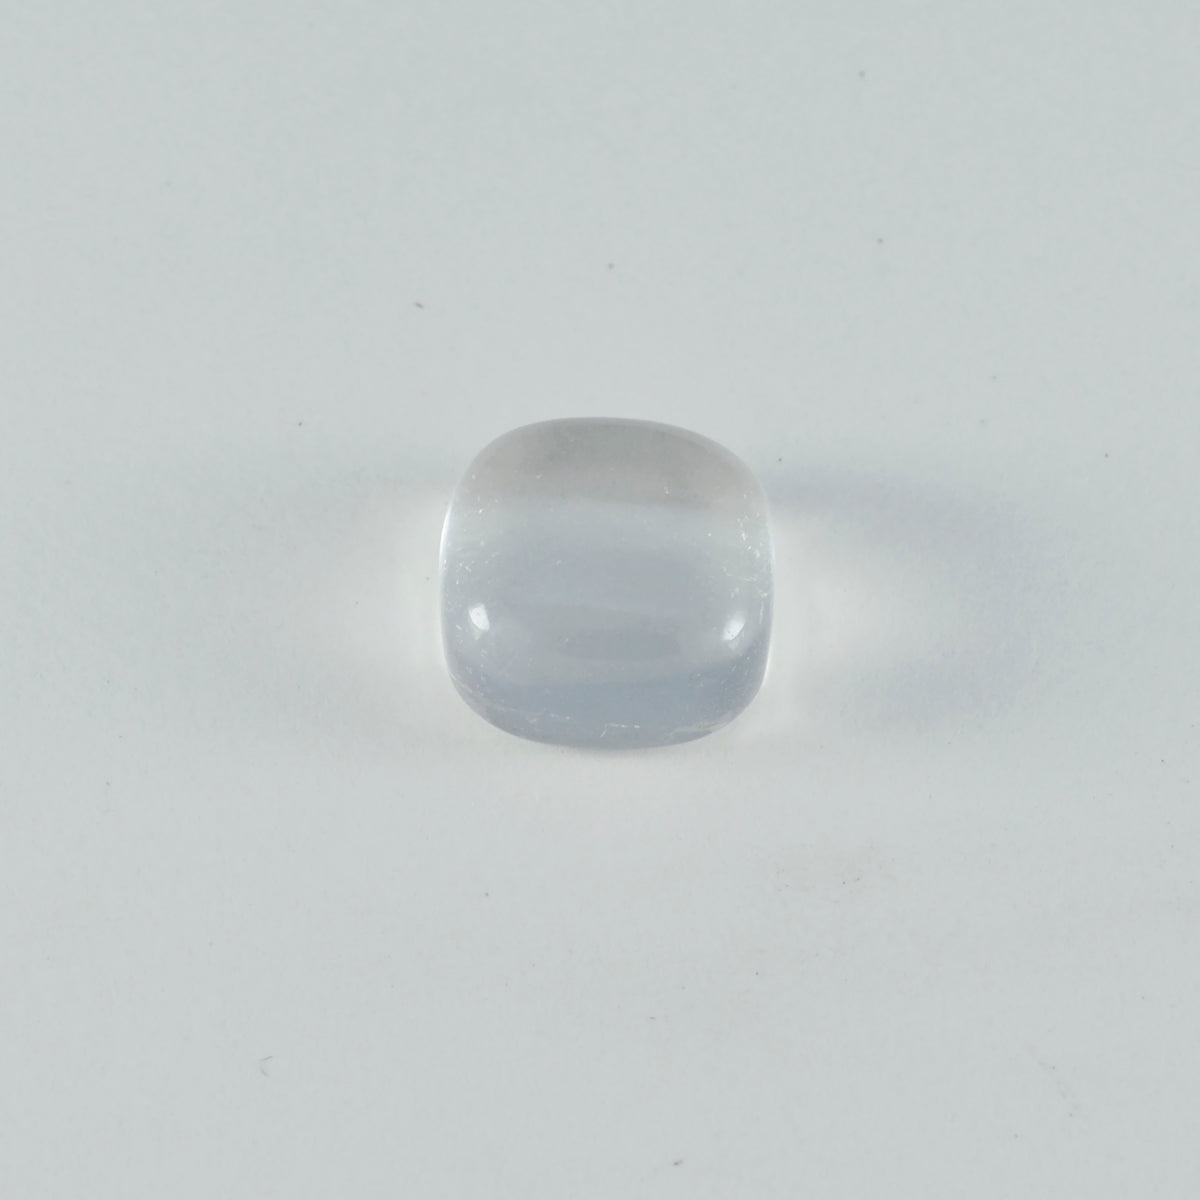 Riyogems 1PC White Crystal Quartz Cabochon 10x10 mm Cushion Shape nice-looking Quality Loose Gemstone